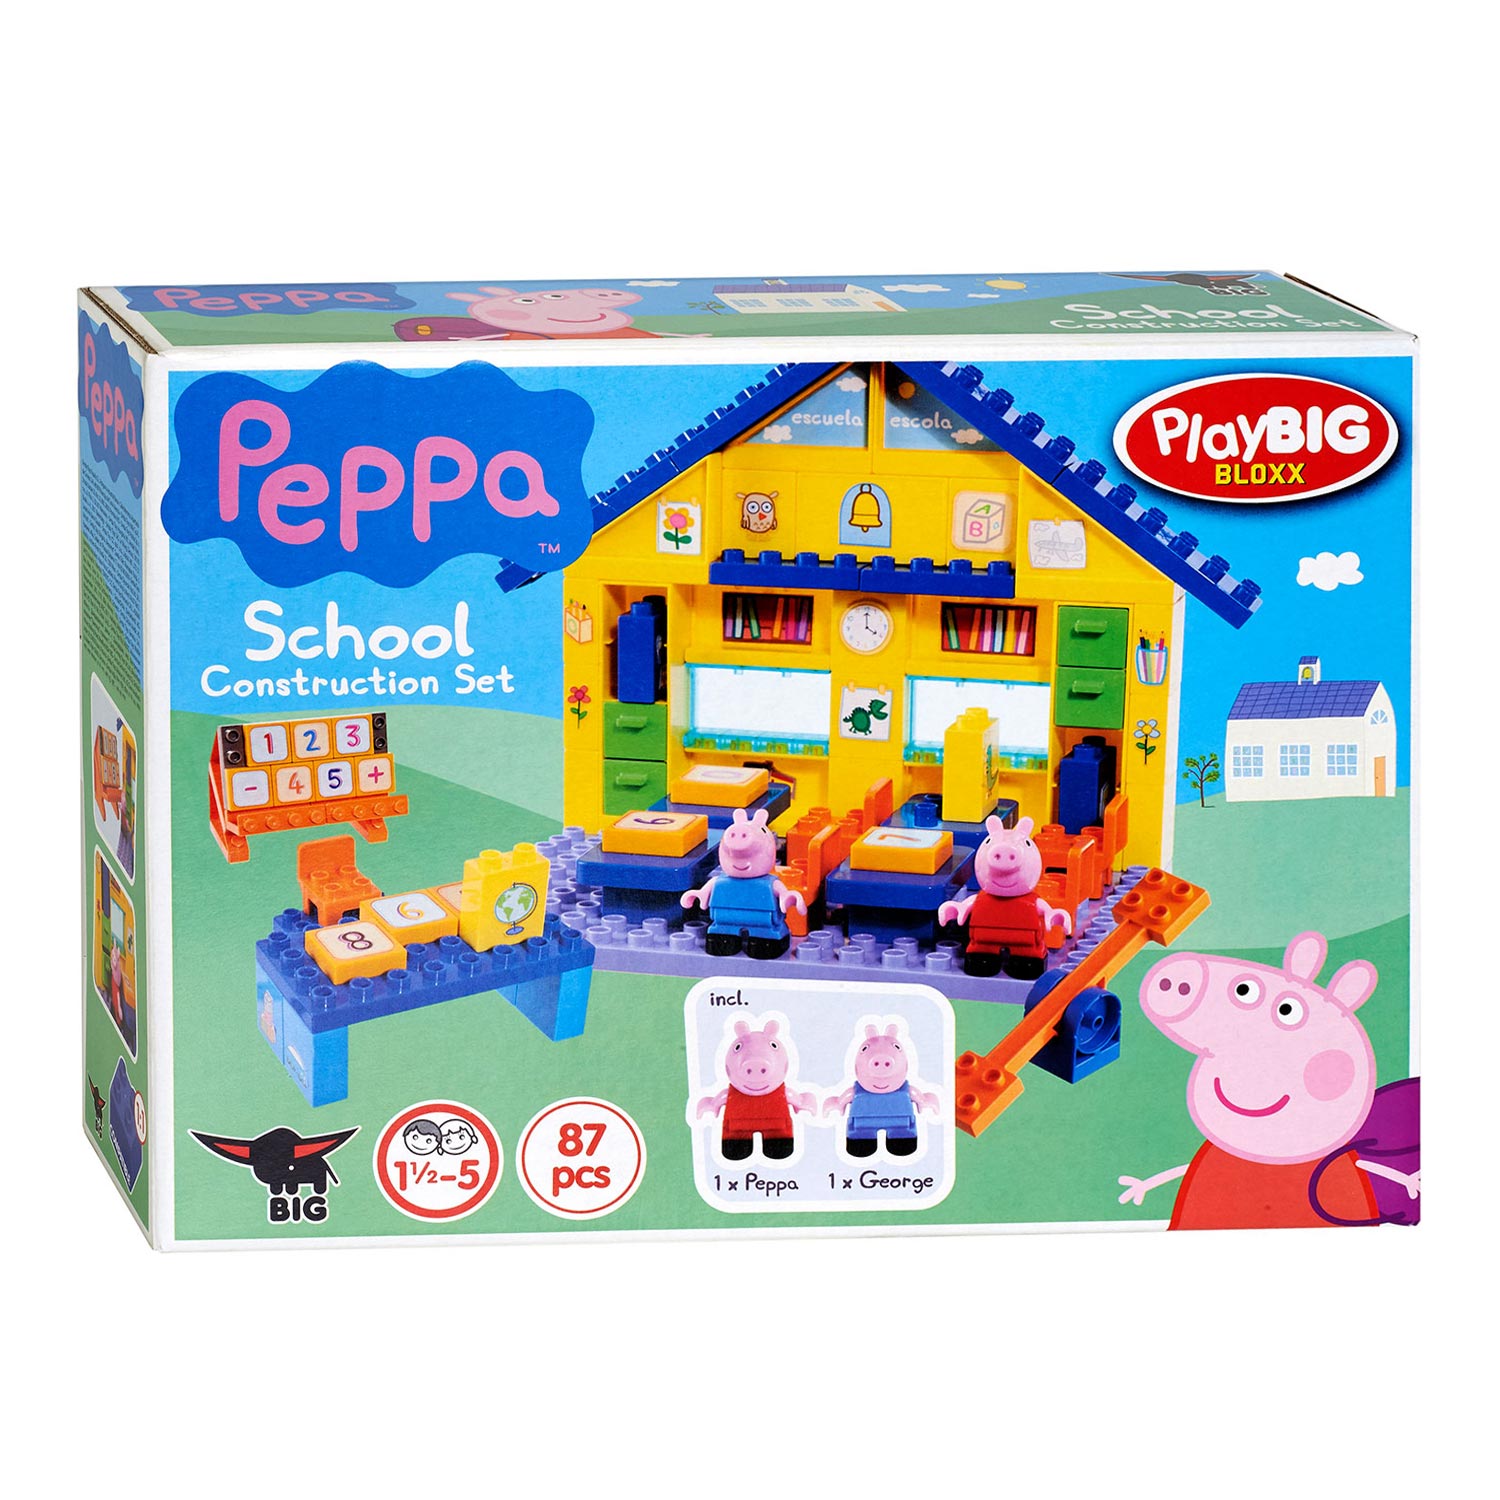 kortademigheid Heb geleerd efficiënt PlayBIG Bloxx Peppa Pig School | Thimble Toys